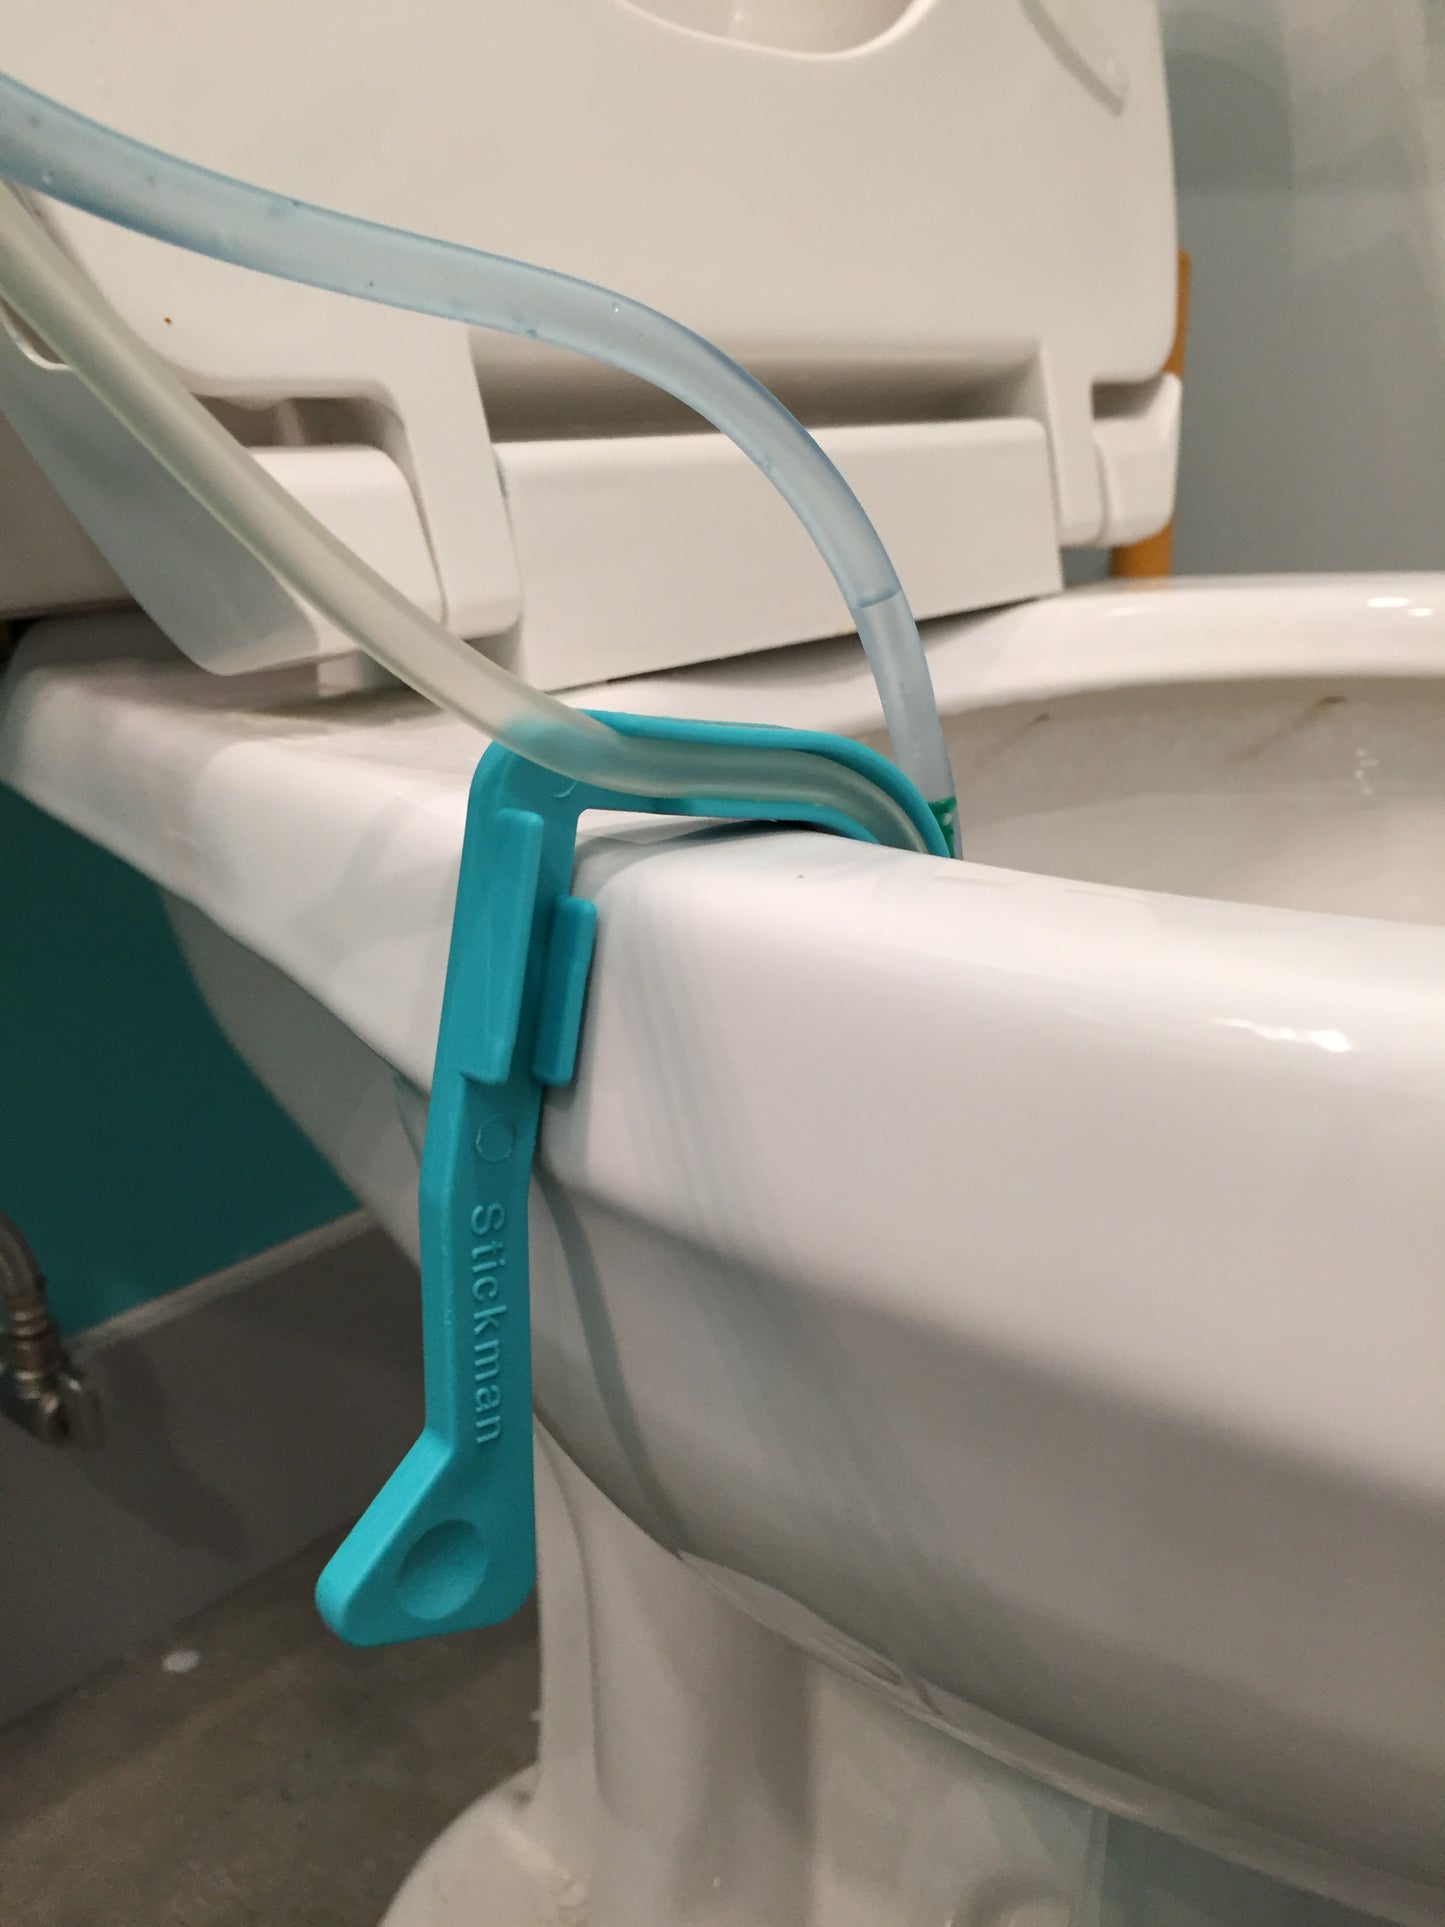 Drain-Away Toilet Clip for Peritoneal Dialysis